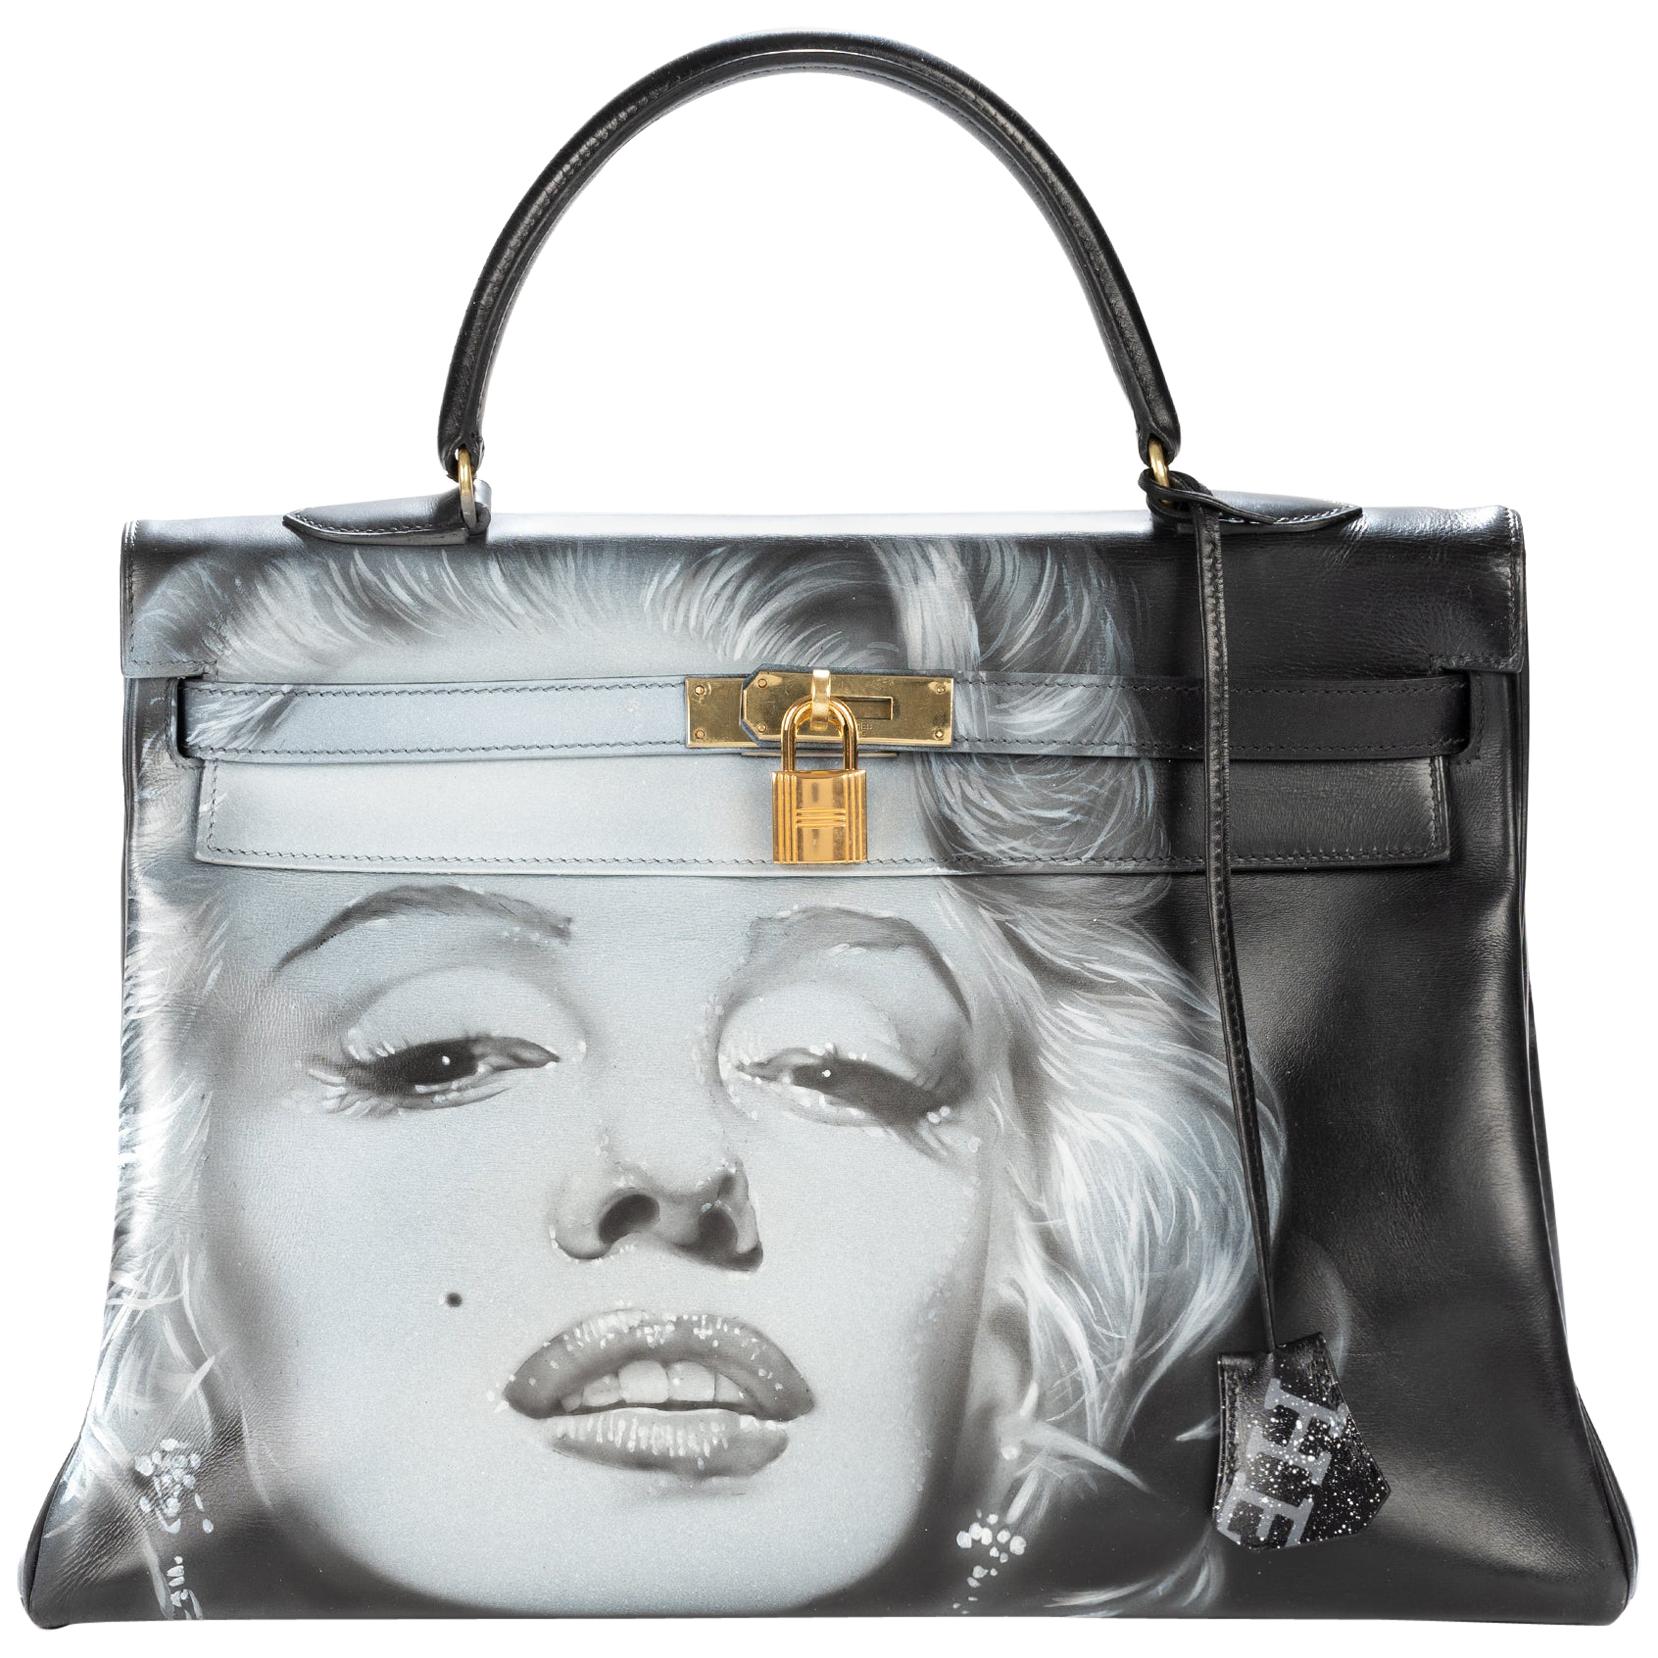 Amazing creation Marilyn Monroe#46 on Kelly 35 cm handbag in